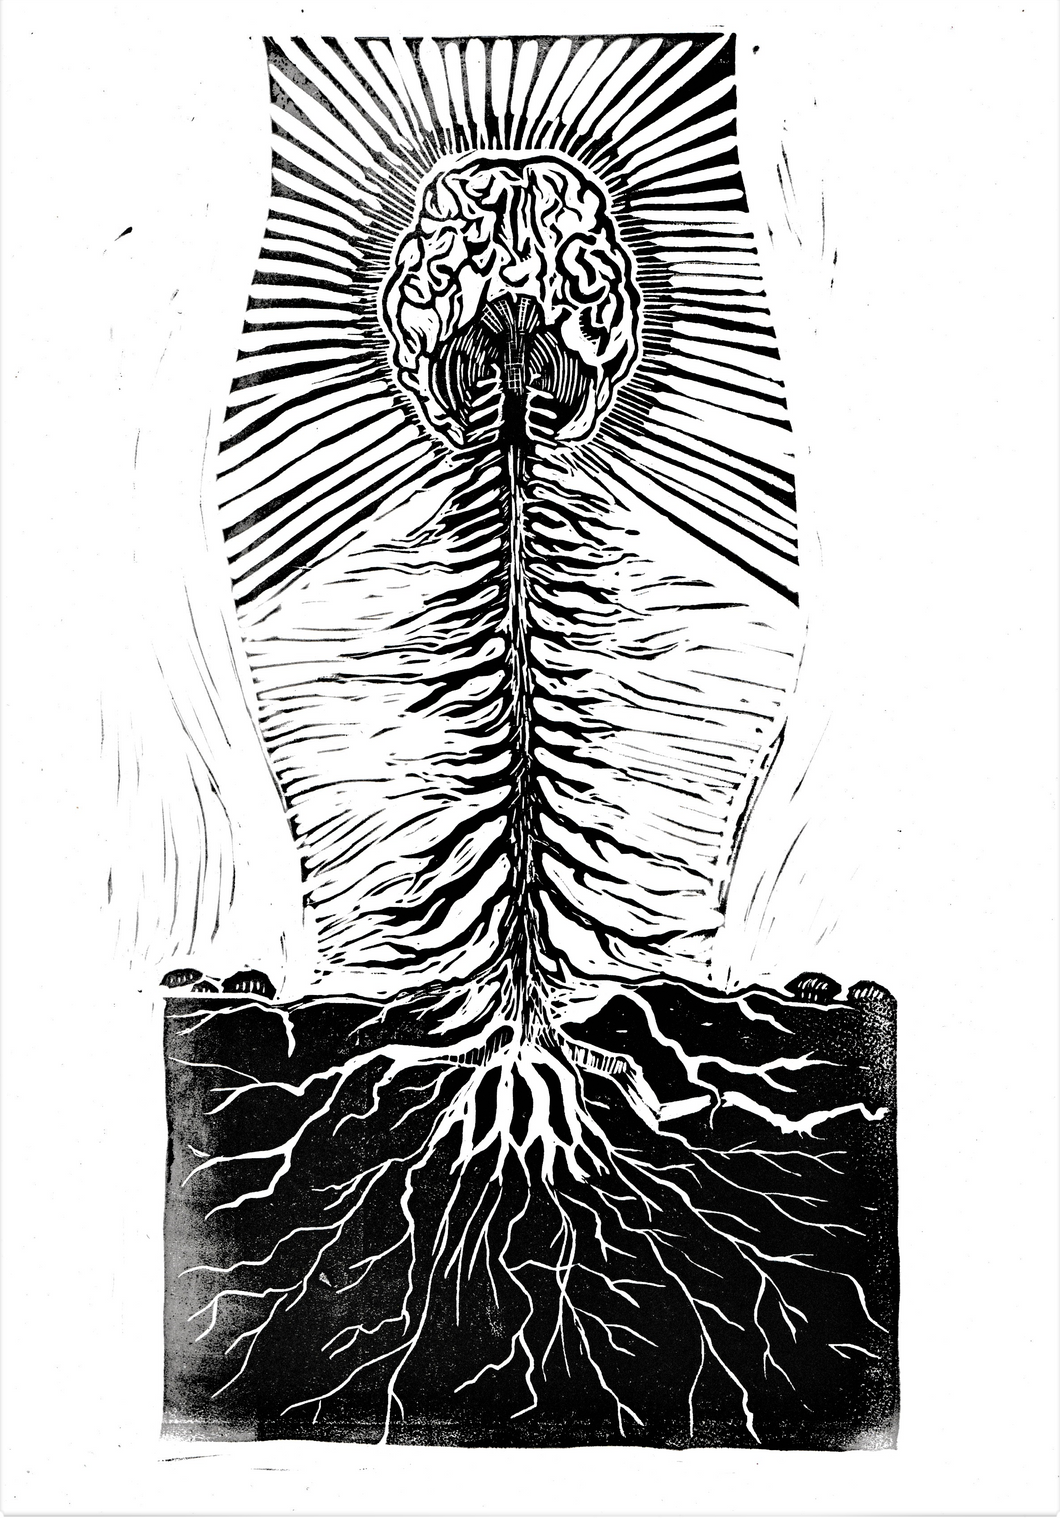 Cerebral nature print- linocut print on paper